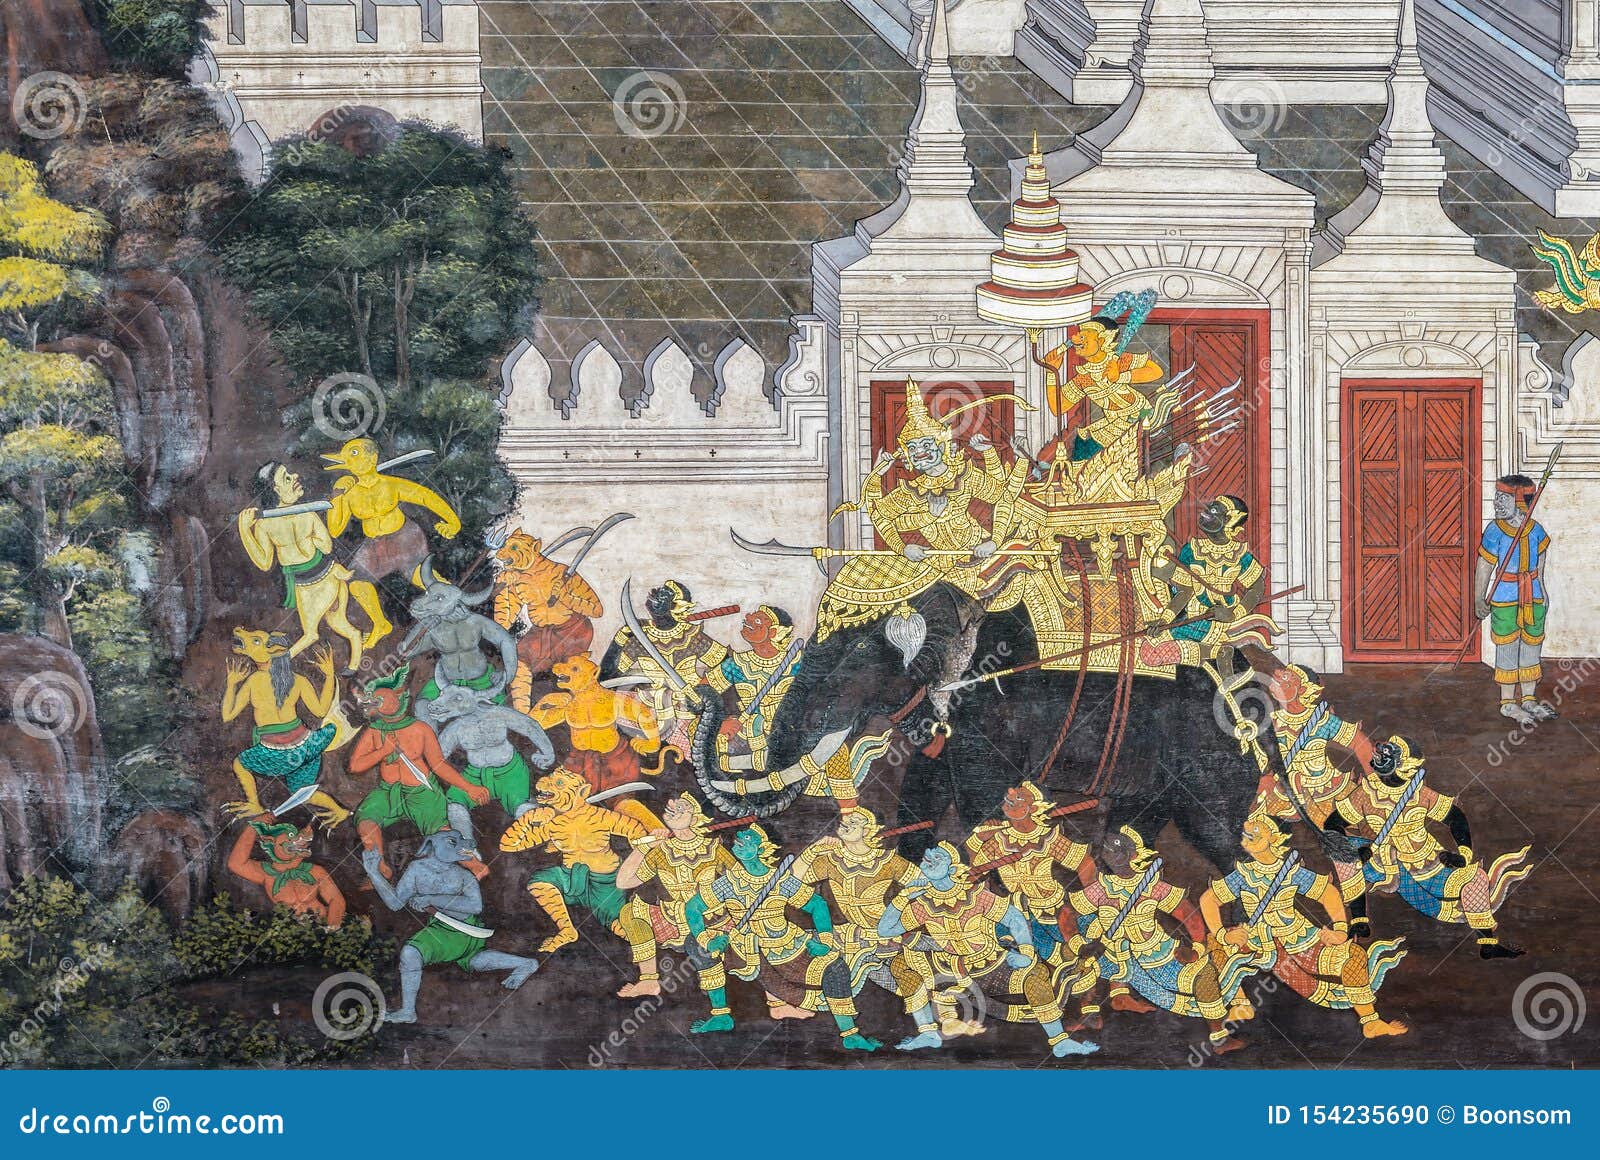 thai mural fresco of ramakien epic at the grand palace in bangkok, thailand